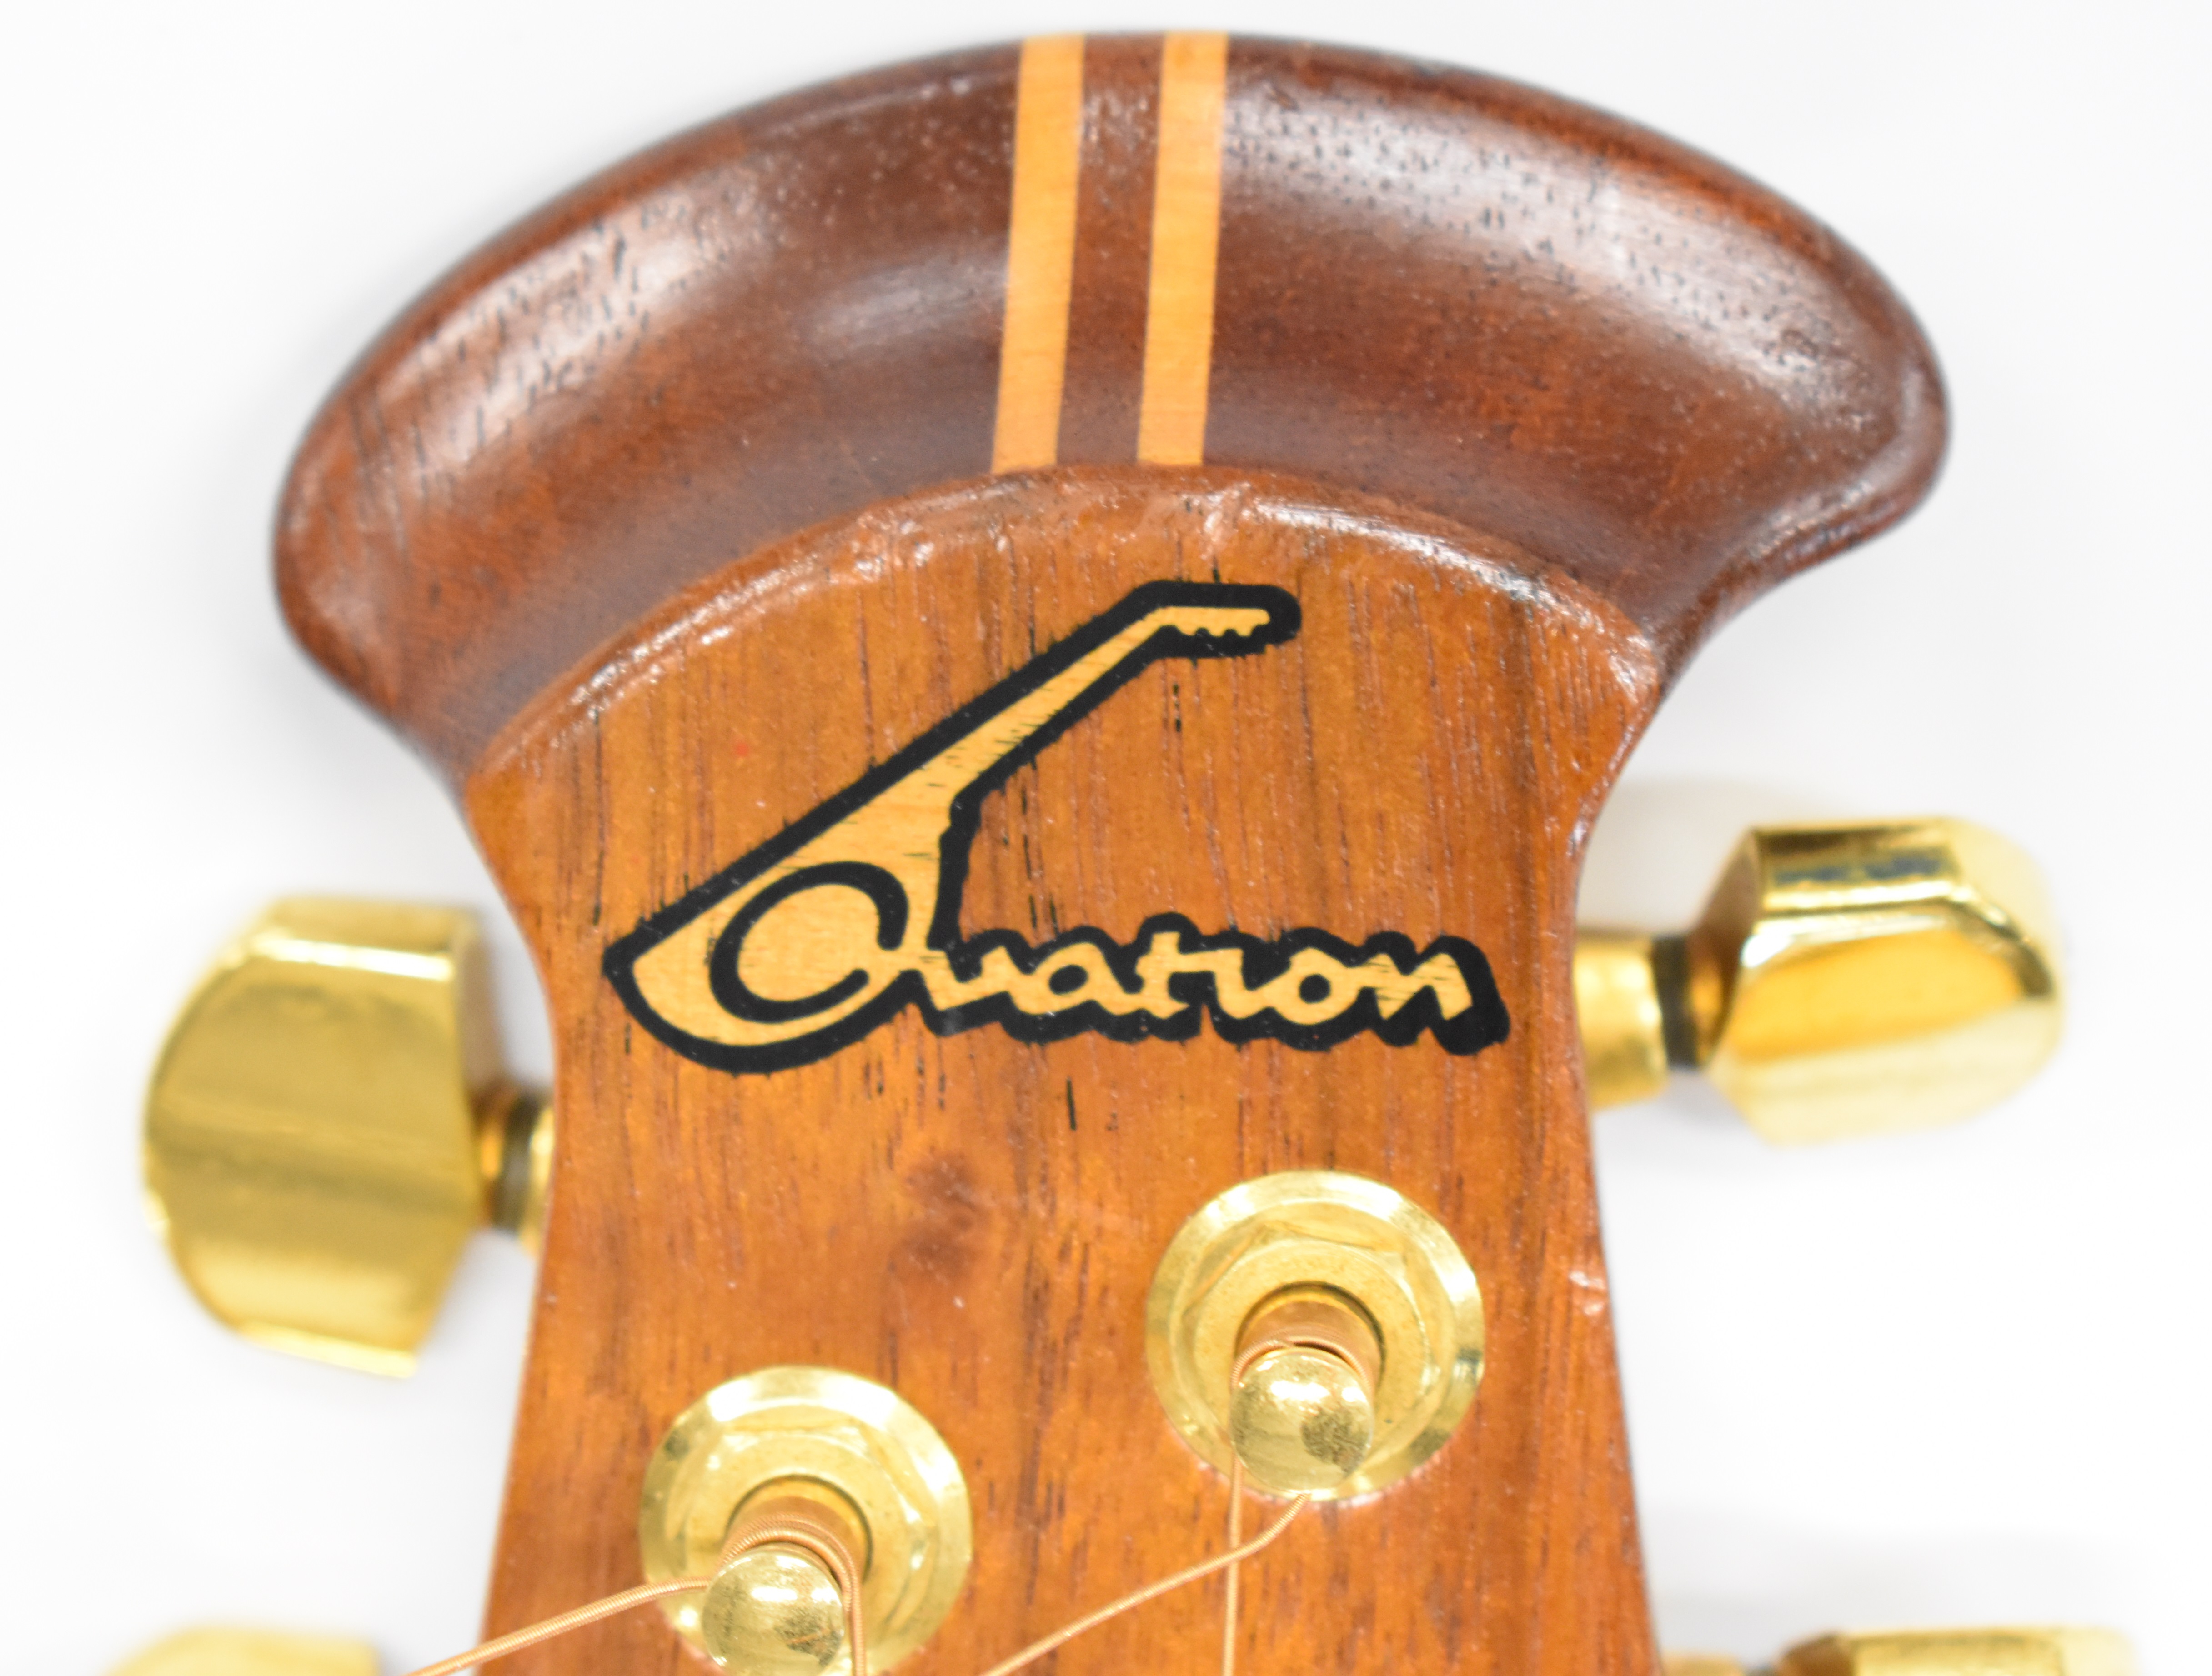 Ovation Elite electro acoustic guitar model number 1868C, with hard case. - Image 4 of 9